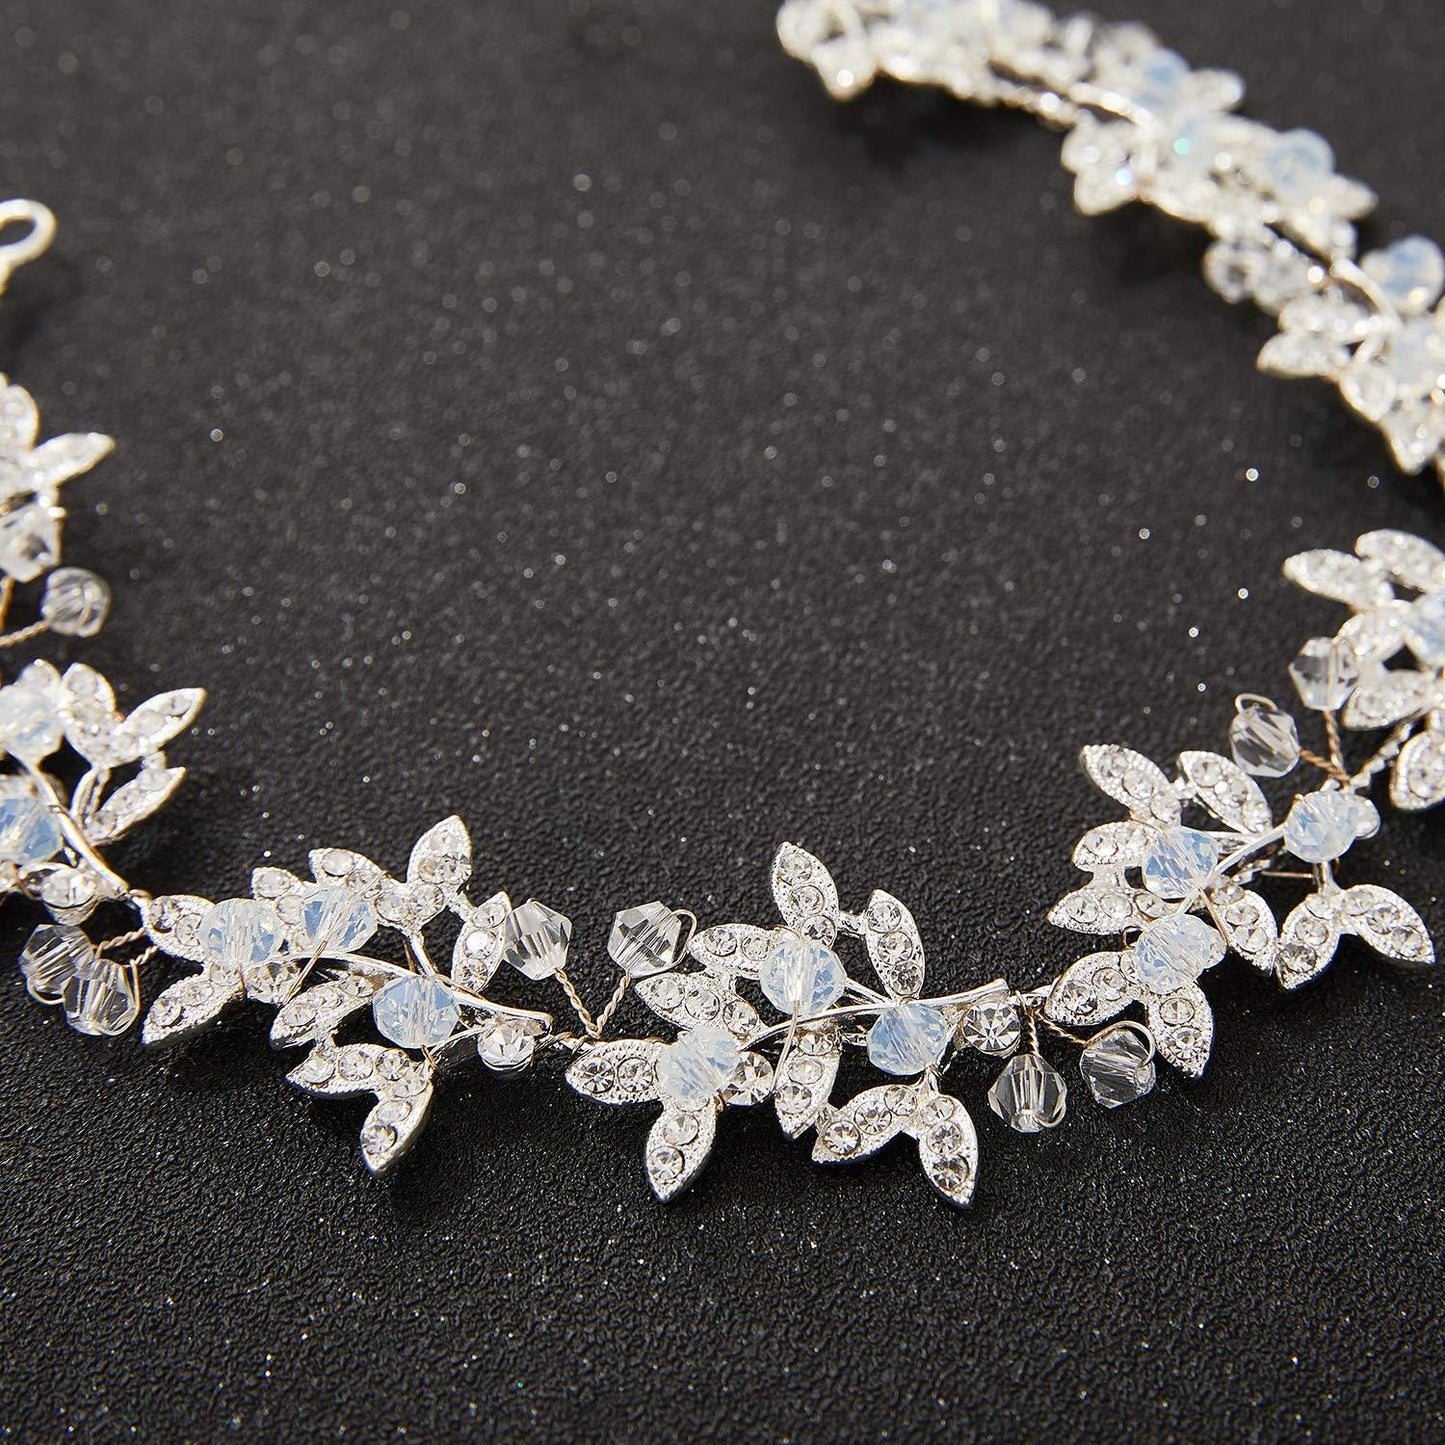 Silver Rhinestone Wedding Headband Tiara Crystal Headpiece Bridal Hair Accessories for Bride